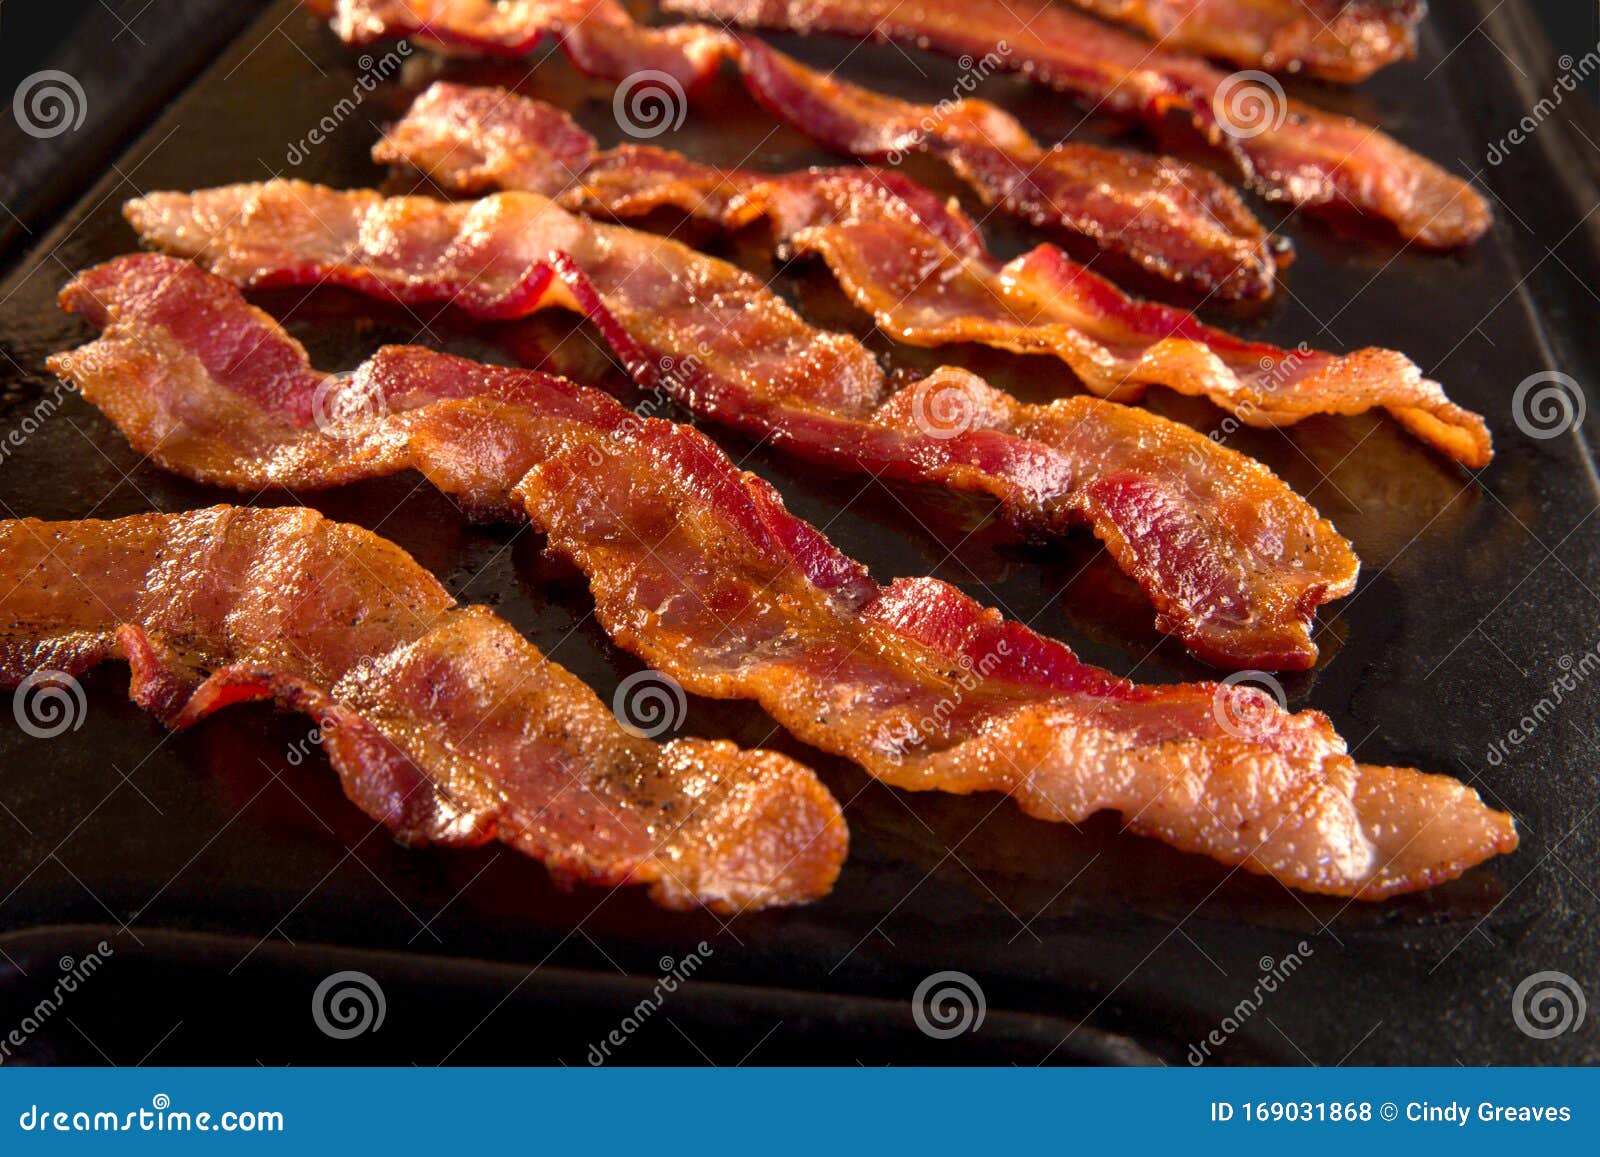 strips of crispy bacon on cast iron pan